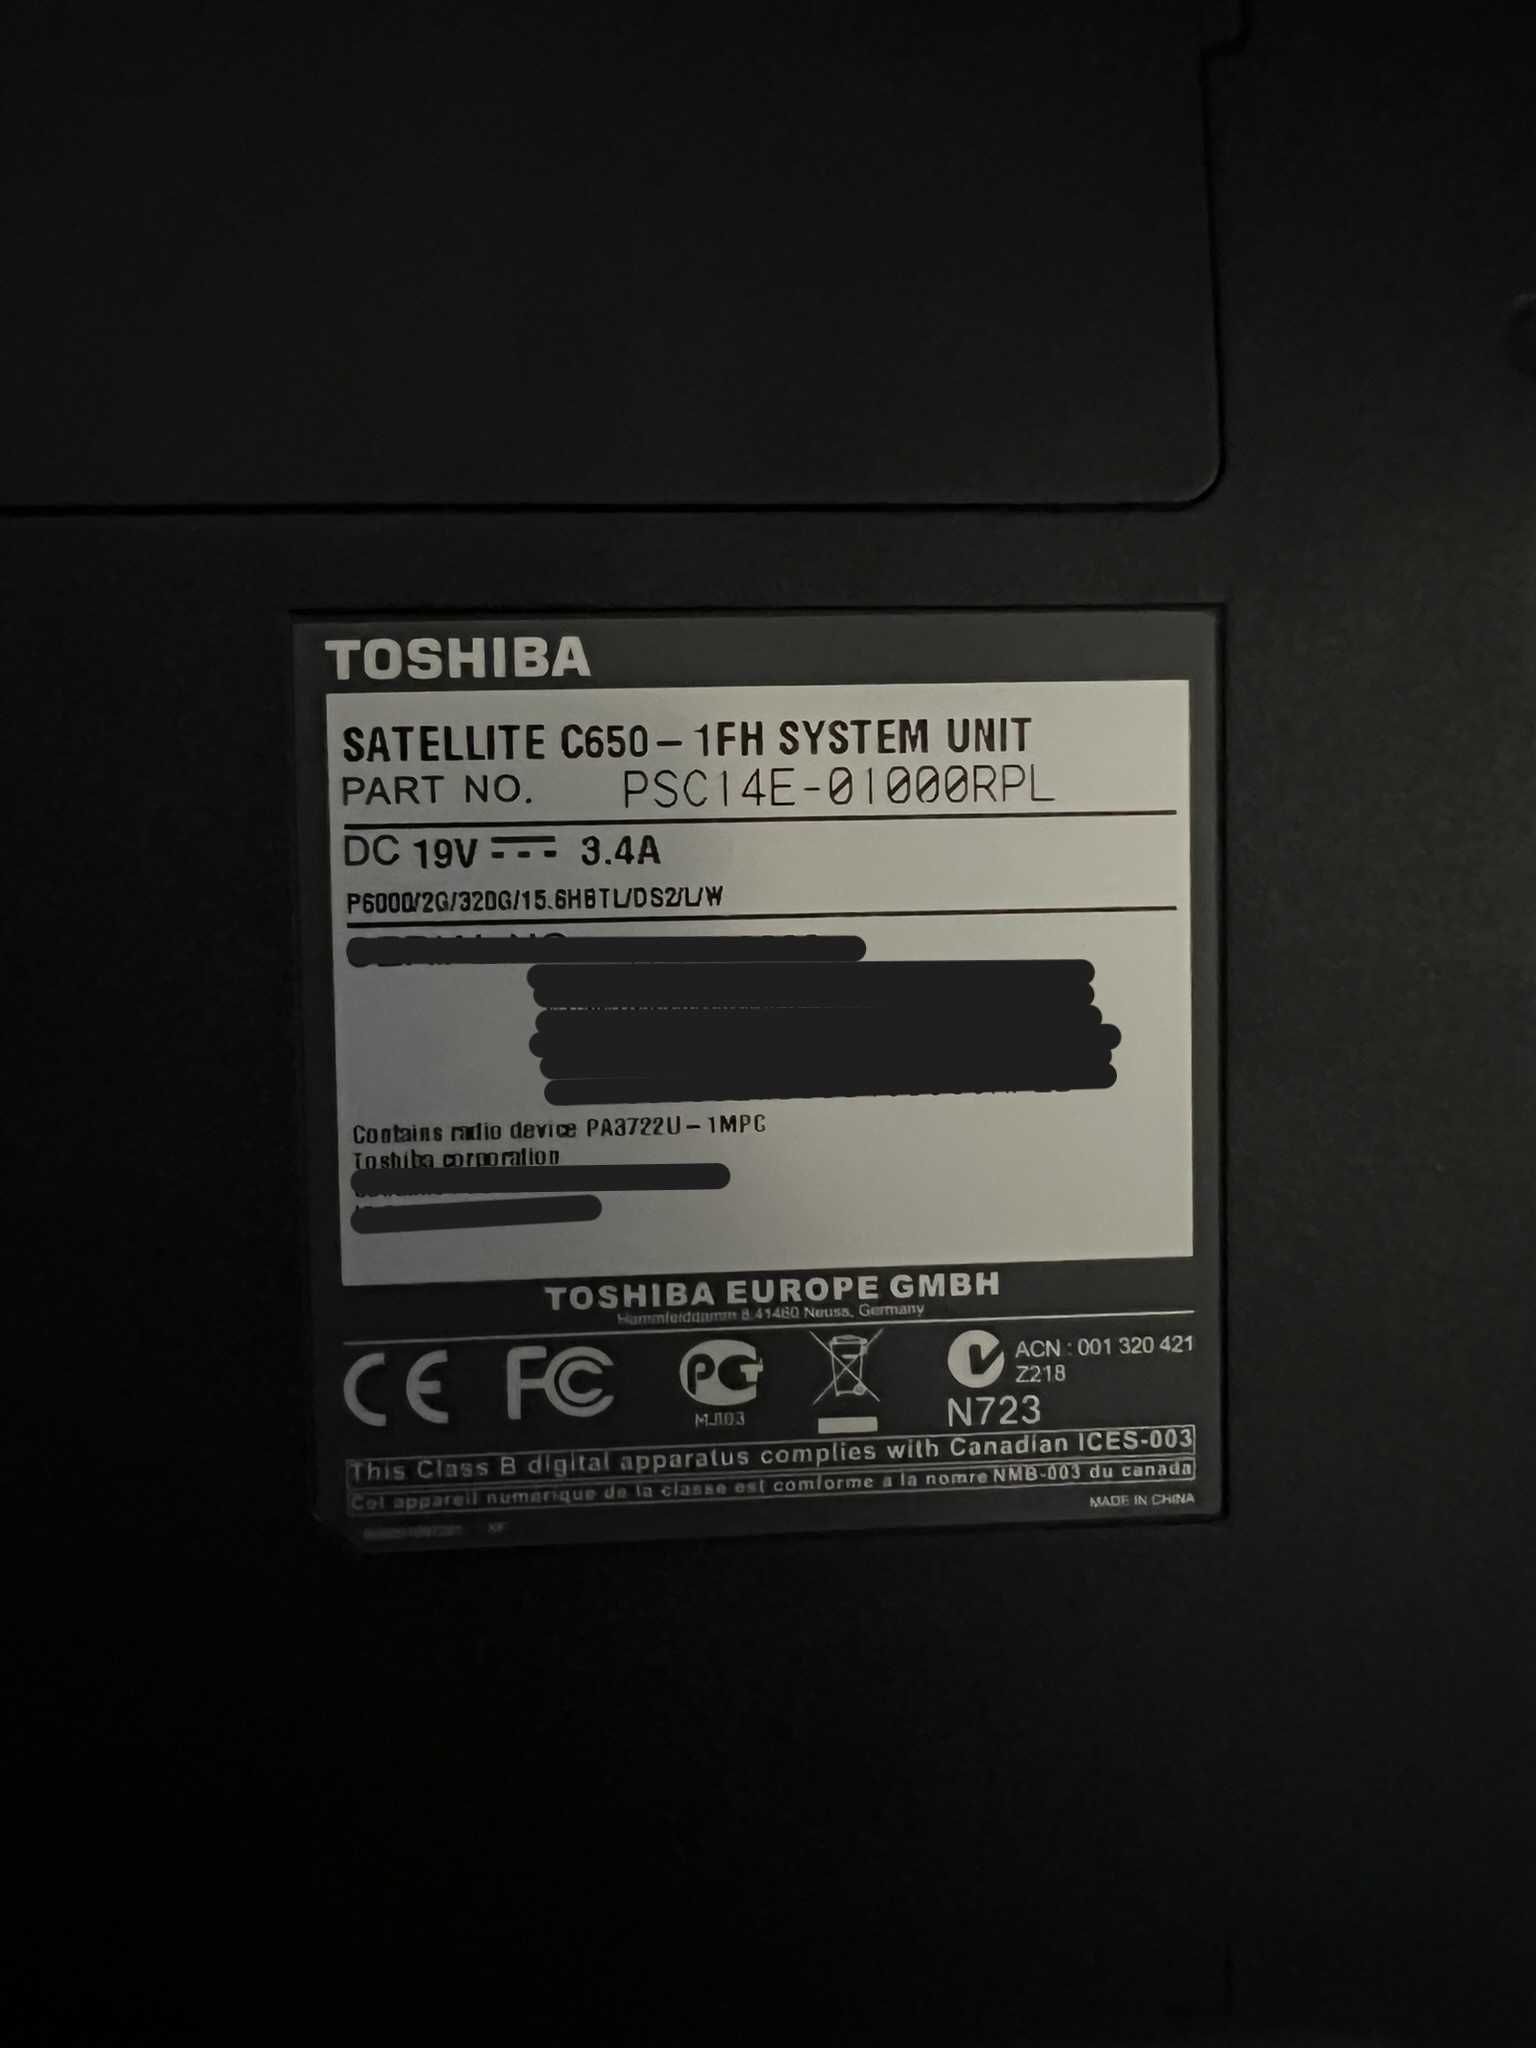 Toshiba Satellite C650 - 1FH